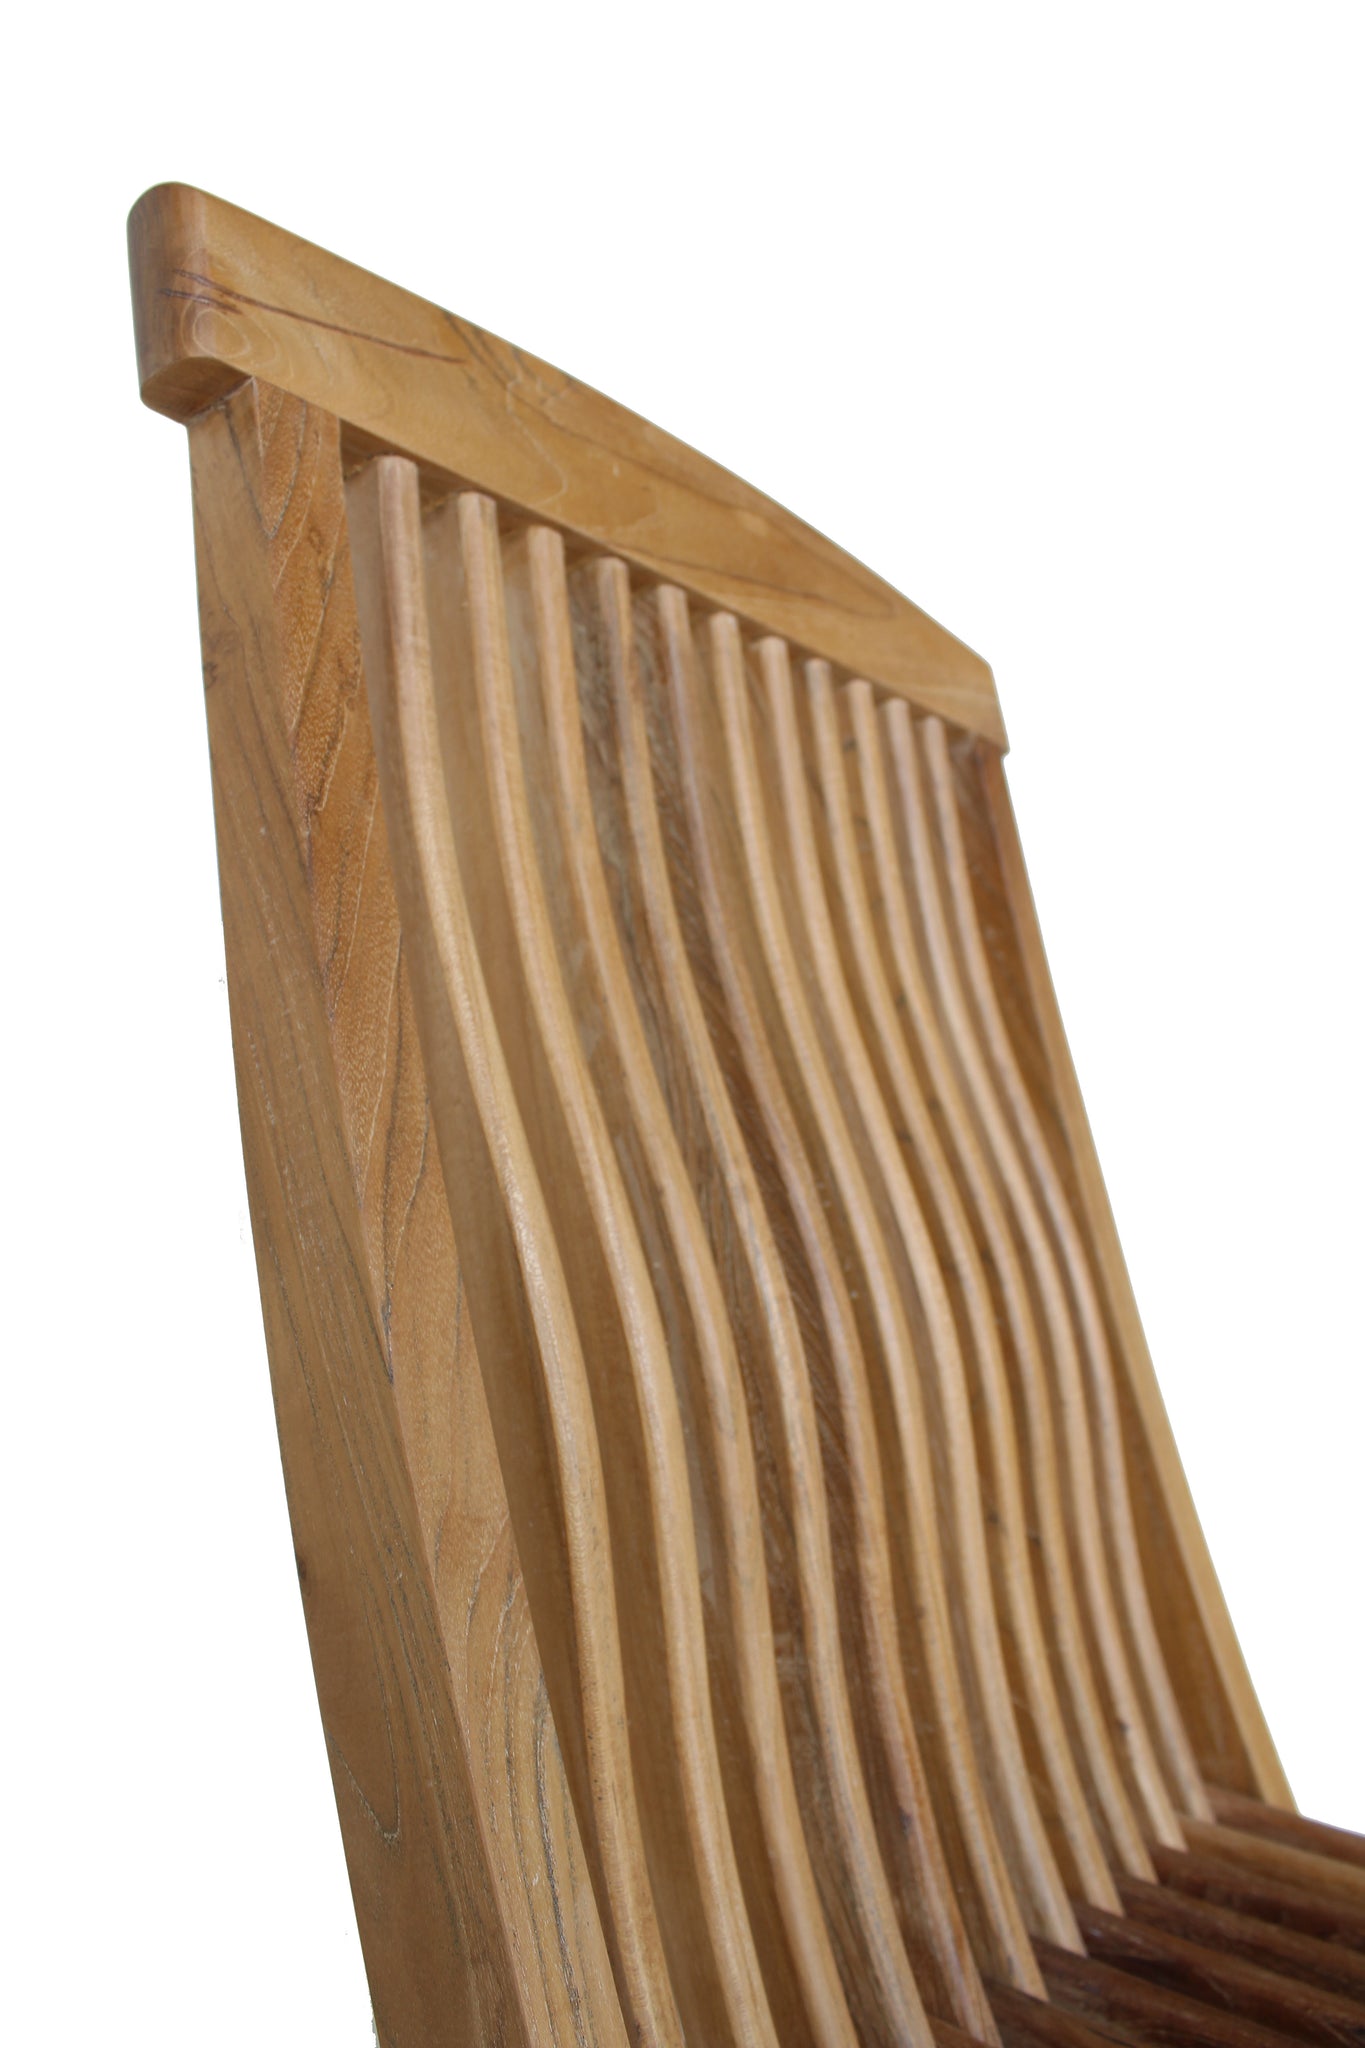 Ubud folding chair